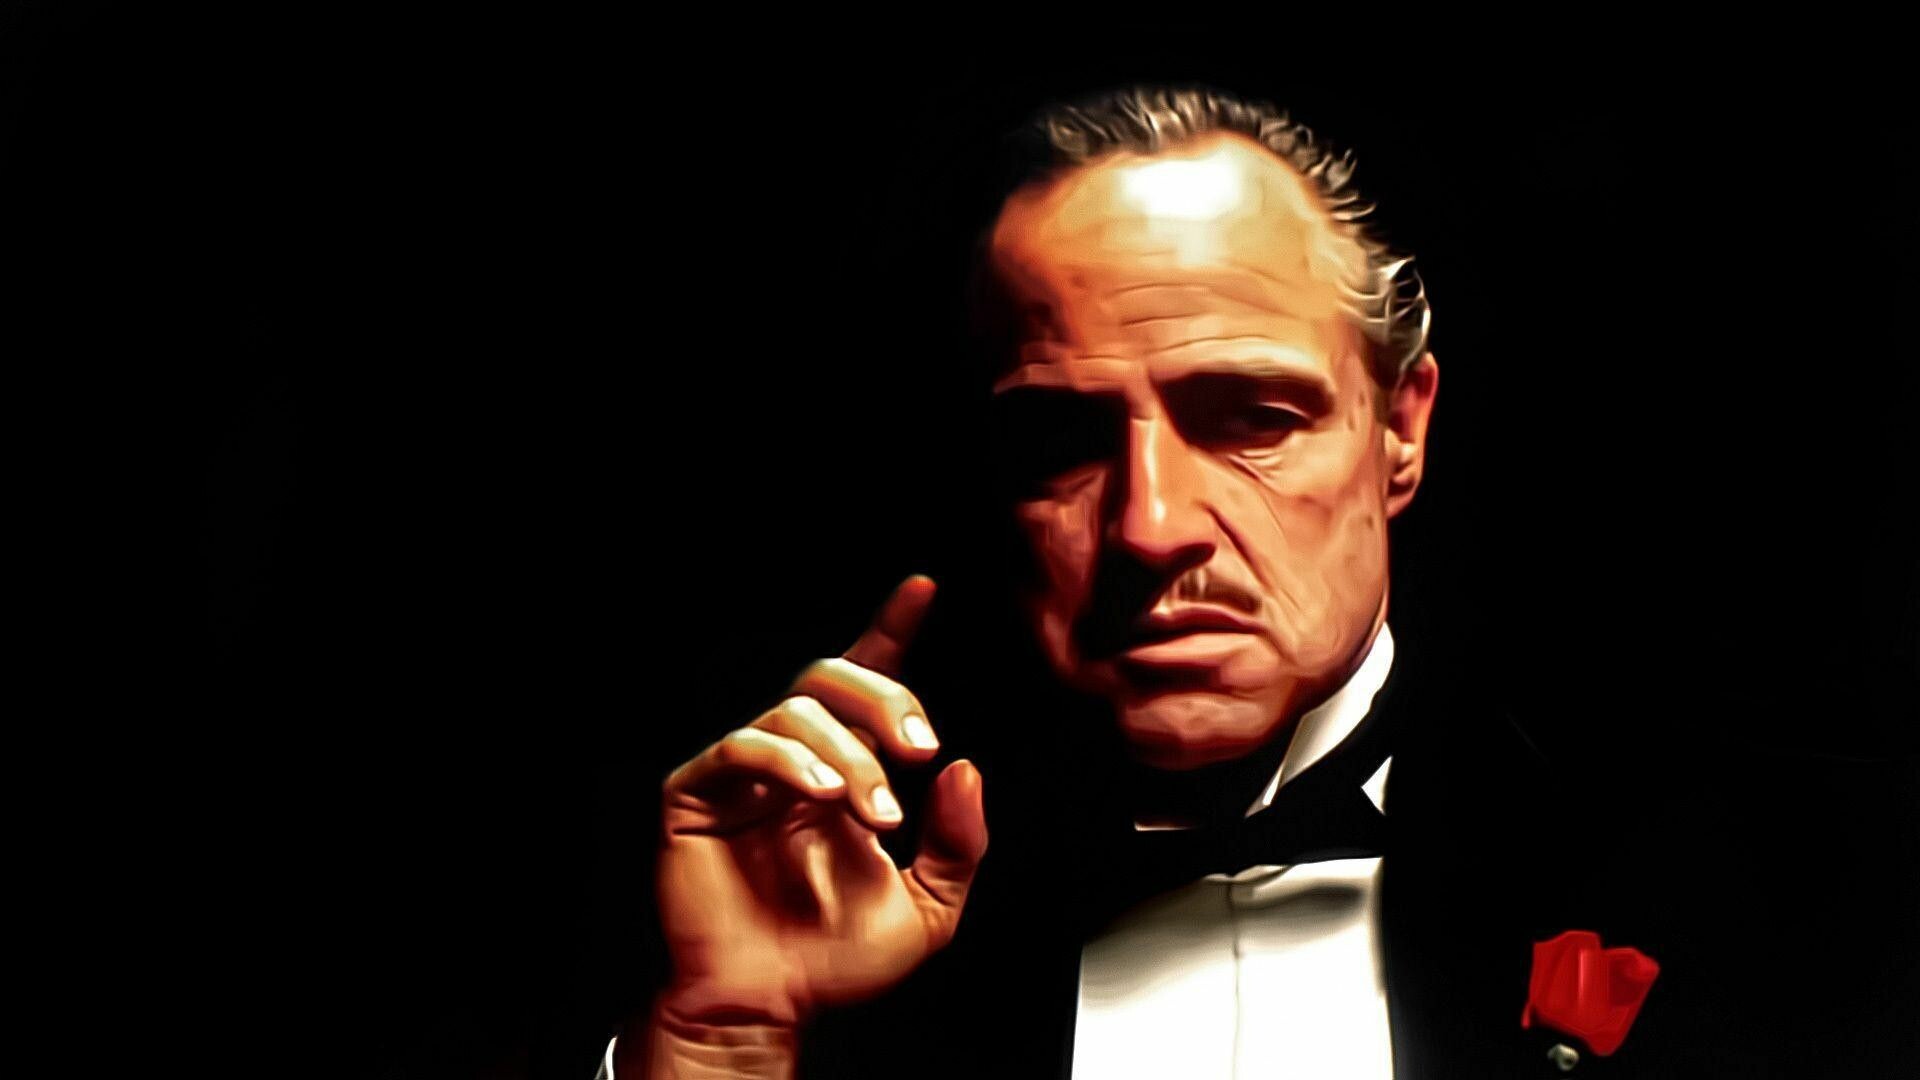 The Godfather: Don Vito Corleone, portrayed by Marlon Brando, 1972 movie. 1920x1080 Full HD Wallpaper.